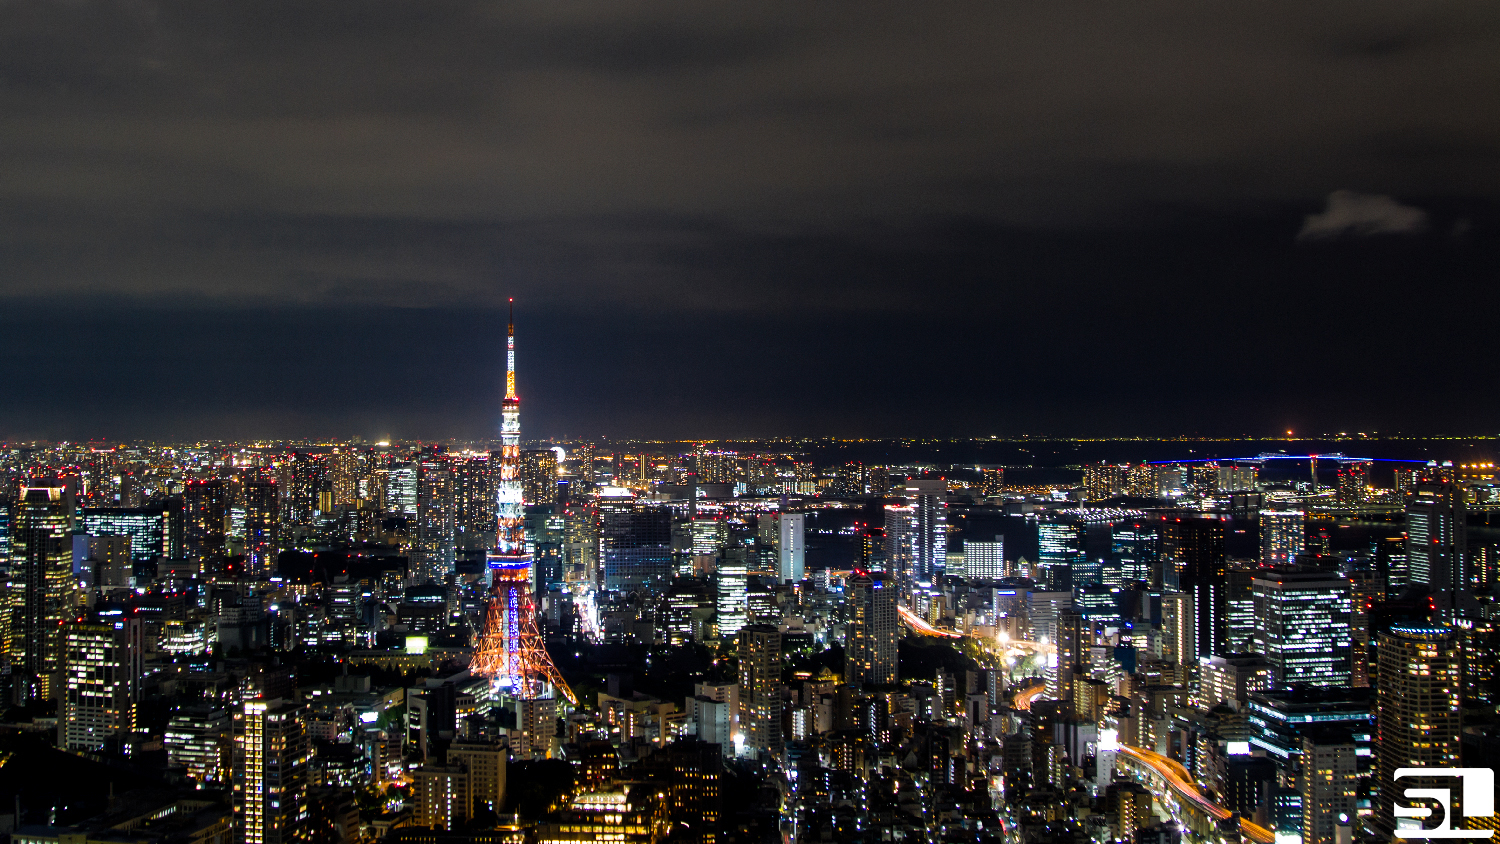 My Tokyo Blog 2.0